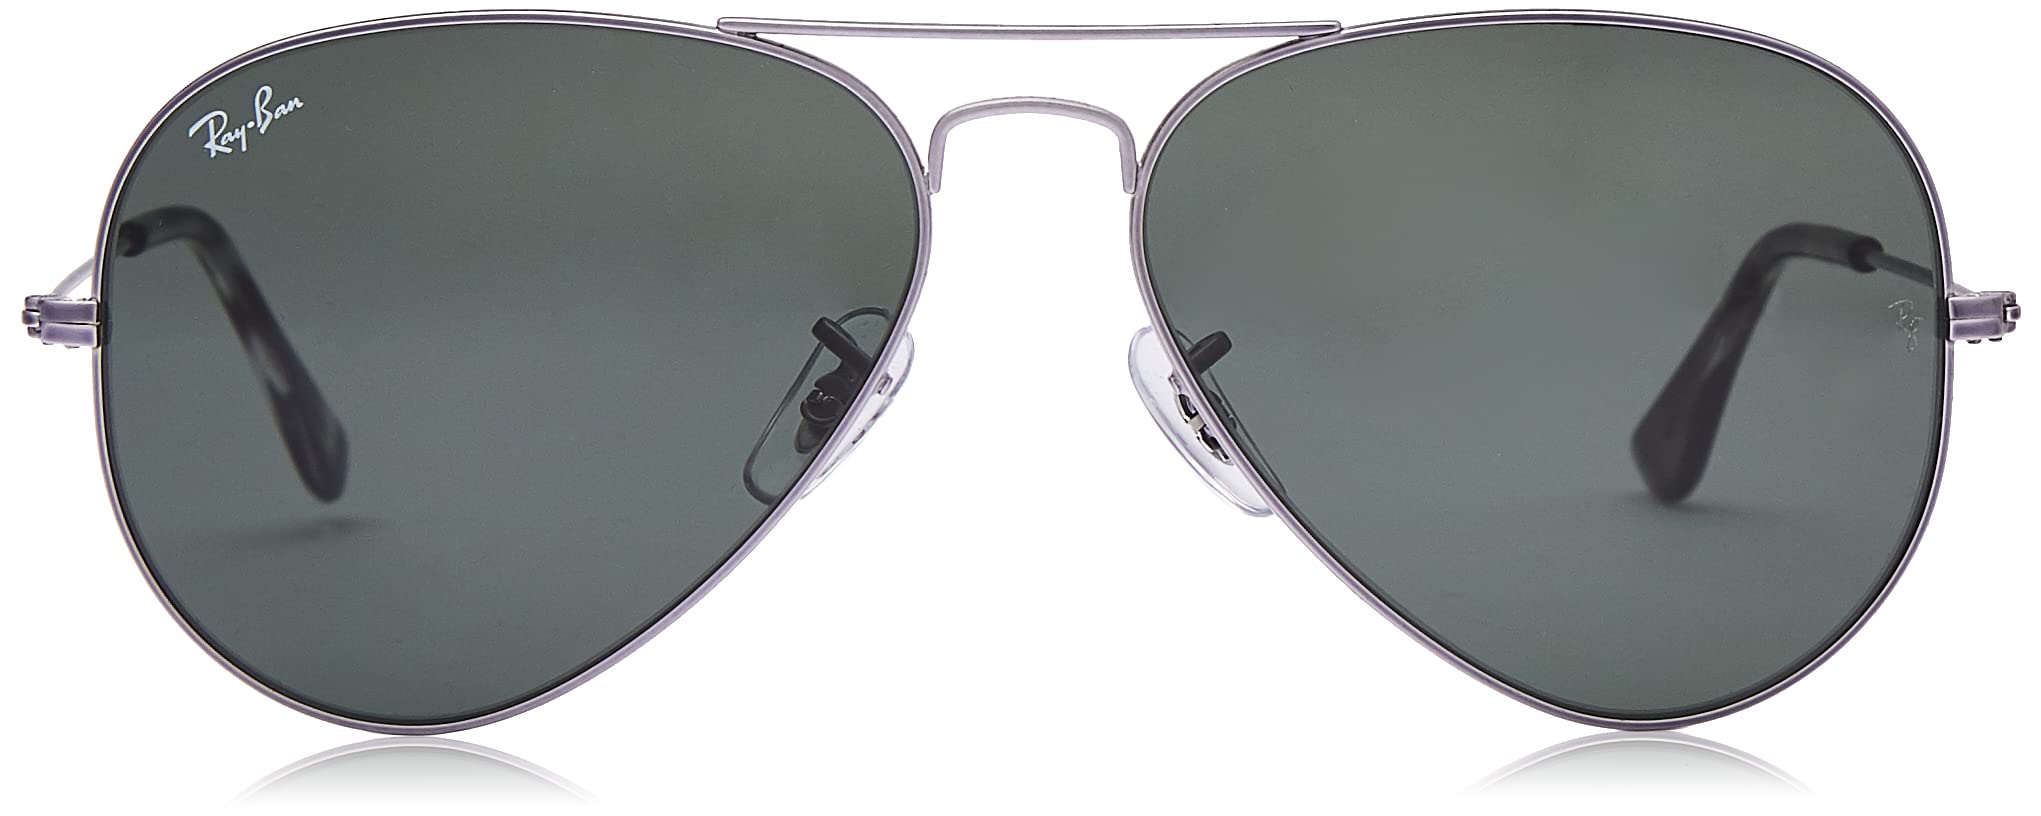 Ray-Ban RB3025 Classic Aviator Sunglasses